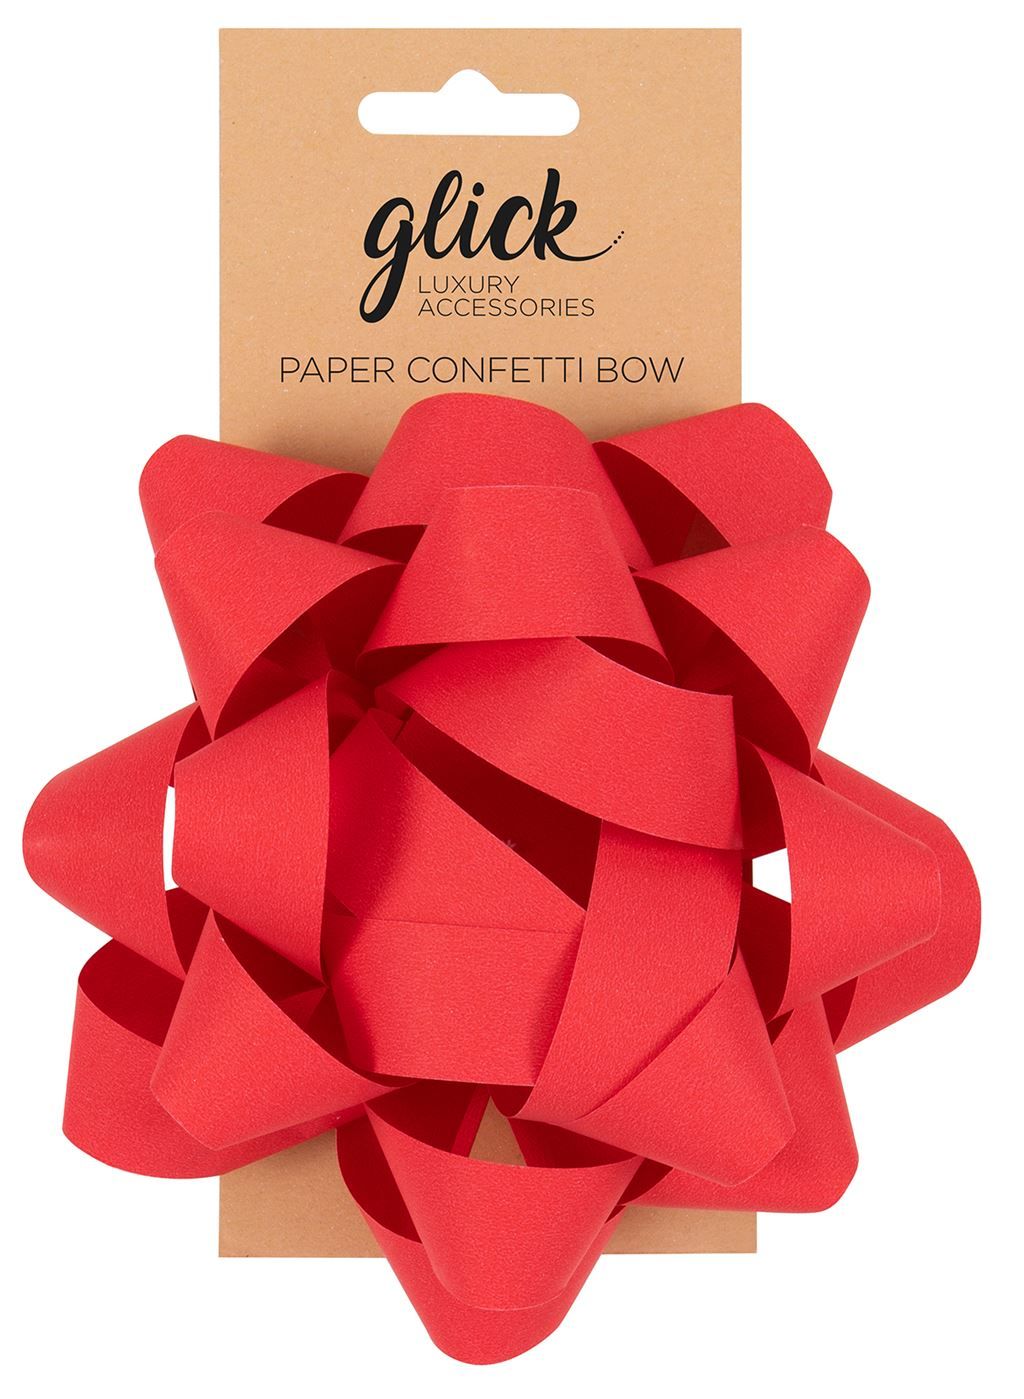 Confetti Bows - PAPER Confetti BOW - RED - 12CM Gift BOW - Gift WRAP Access